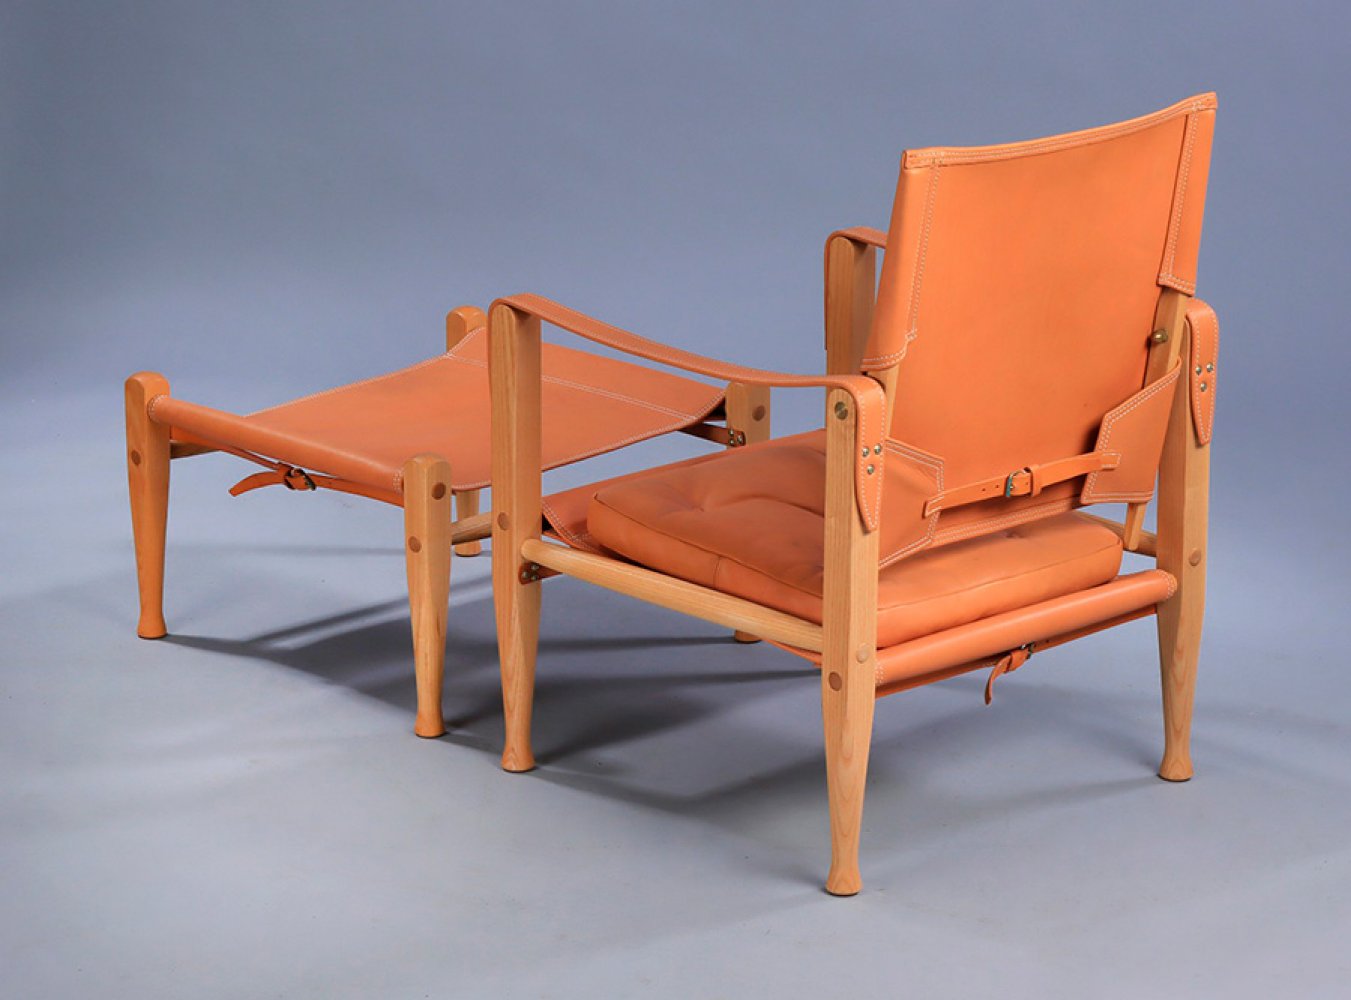 KAARE KLINT (Frederiksberg, 1888-Copenhagen, 1954) for RUD RASMUSSEN.Safaristol chair with stool, - Image 6 of 7